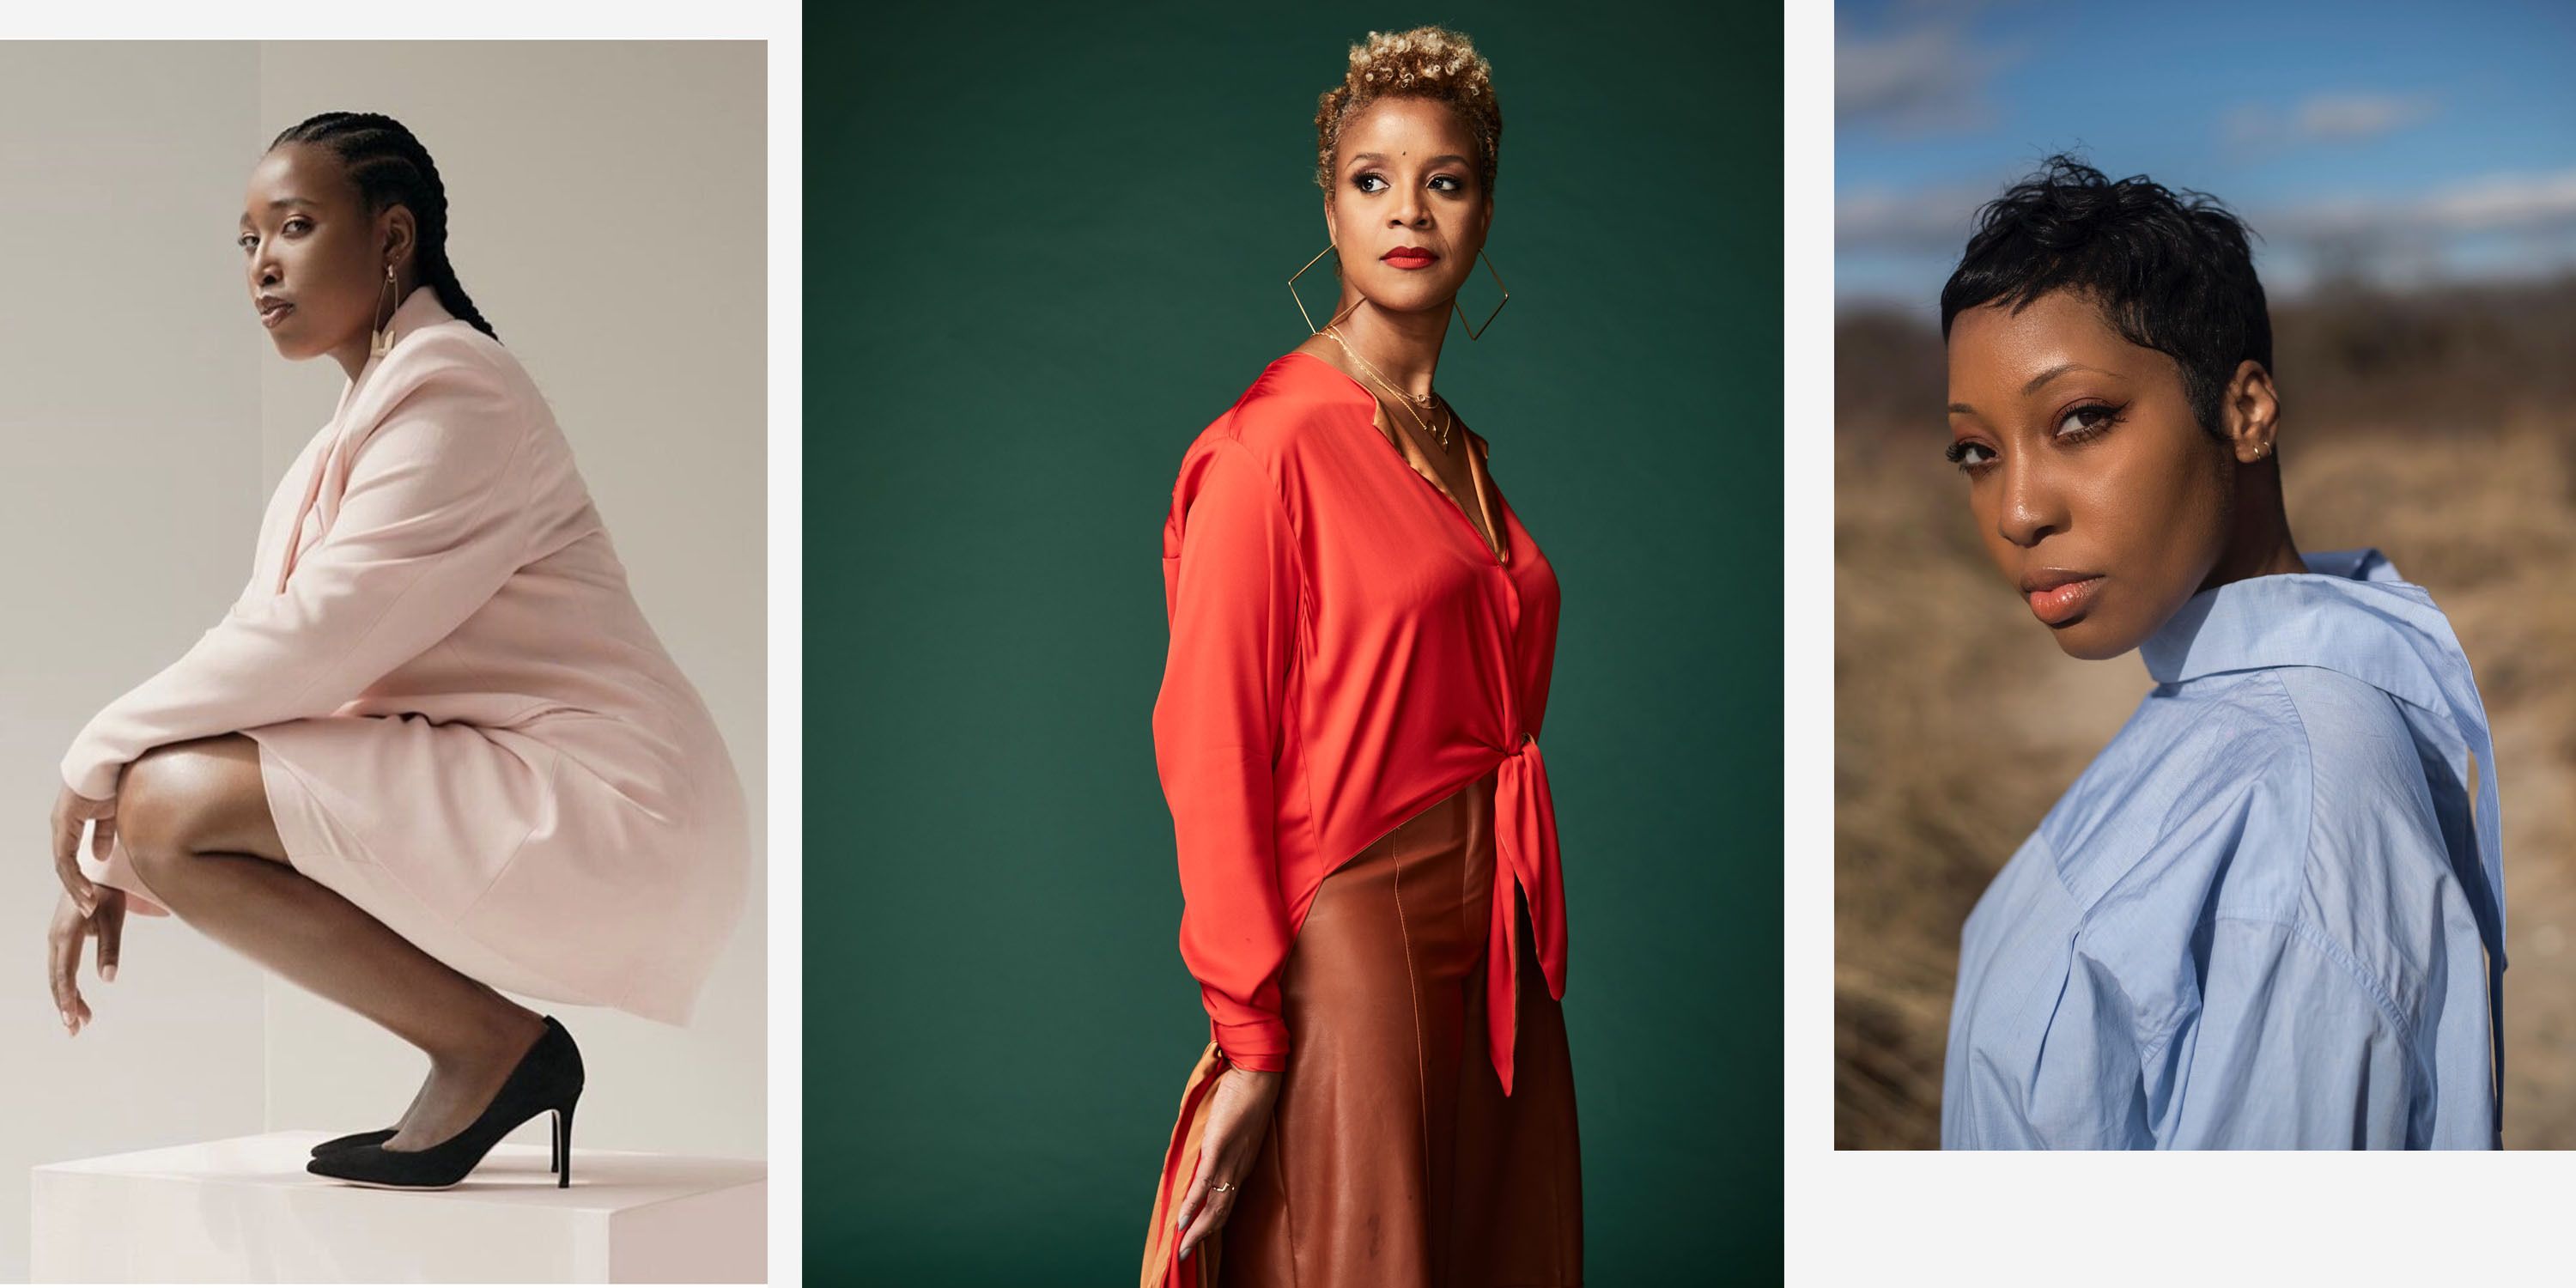 Fashion Designer Makes Risky Move to Add Black Lives Matter